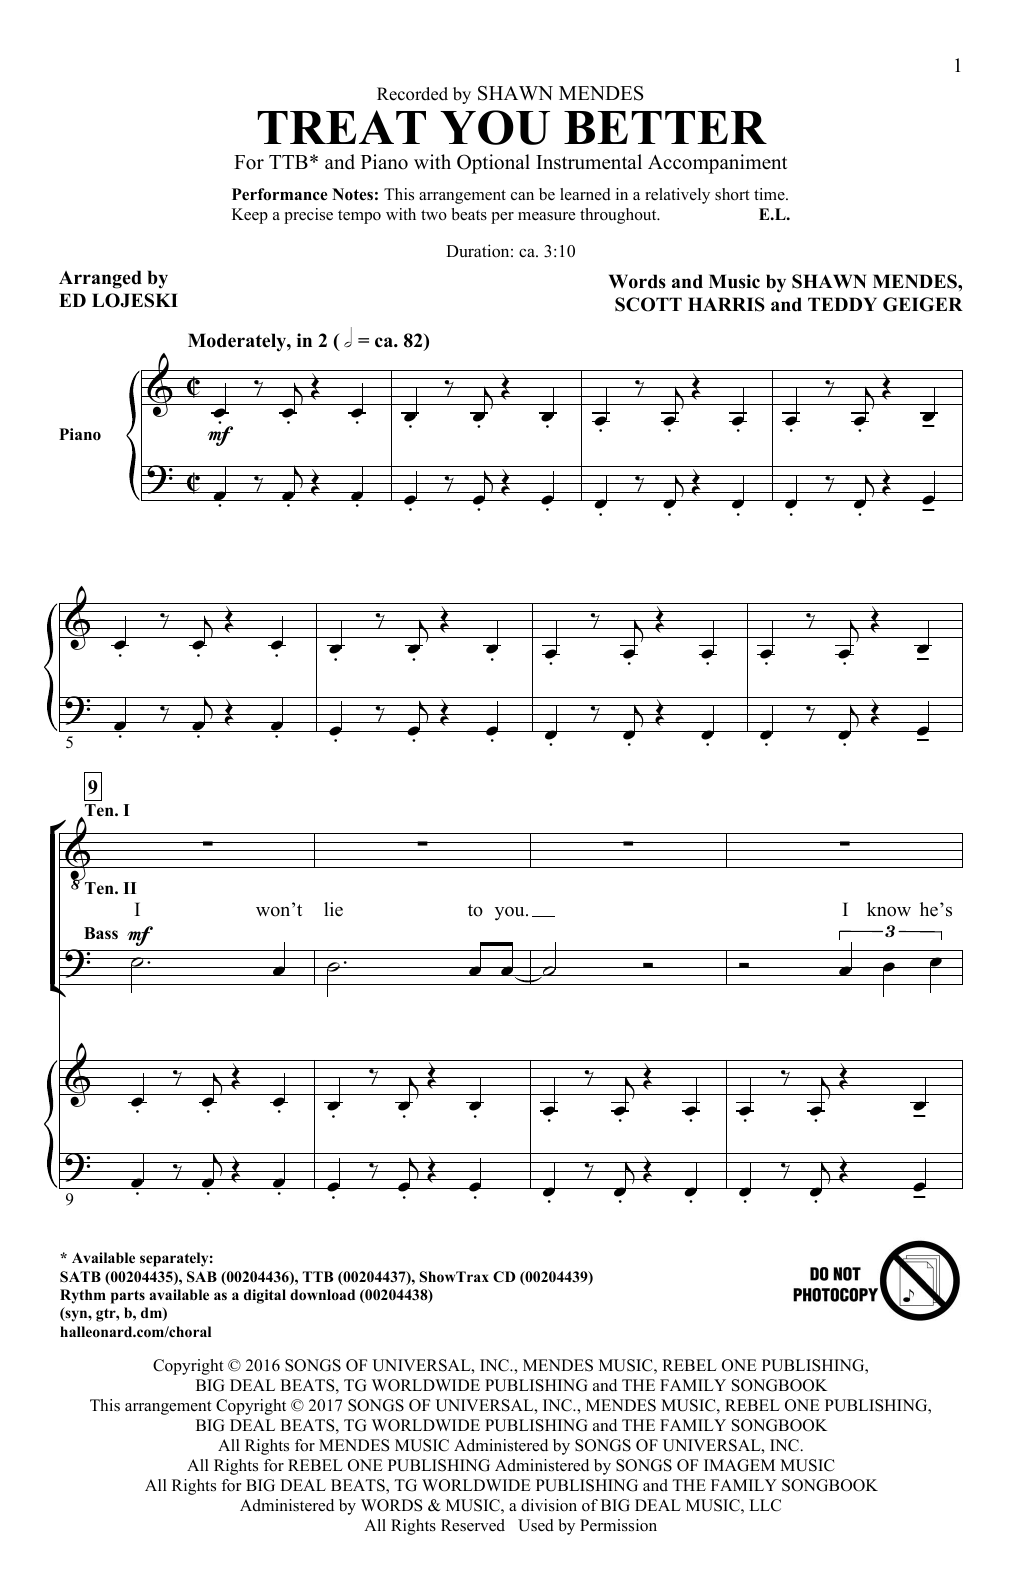 Shawn Mendes Treat You Better (arr. Ed Lojeski) Sheet Music Notes & Chords for TTBB - Download or Print PDF